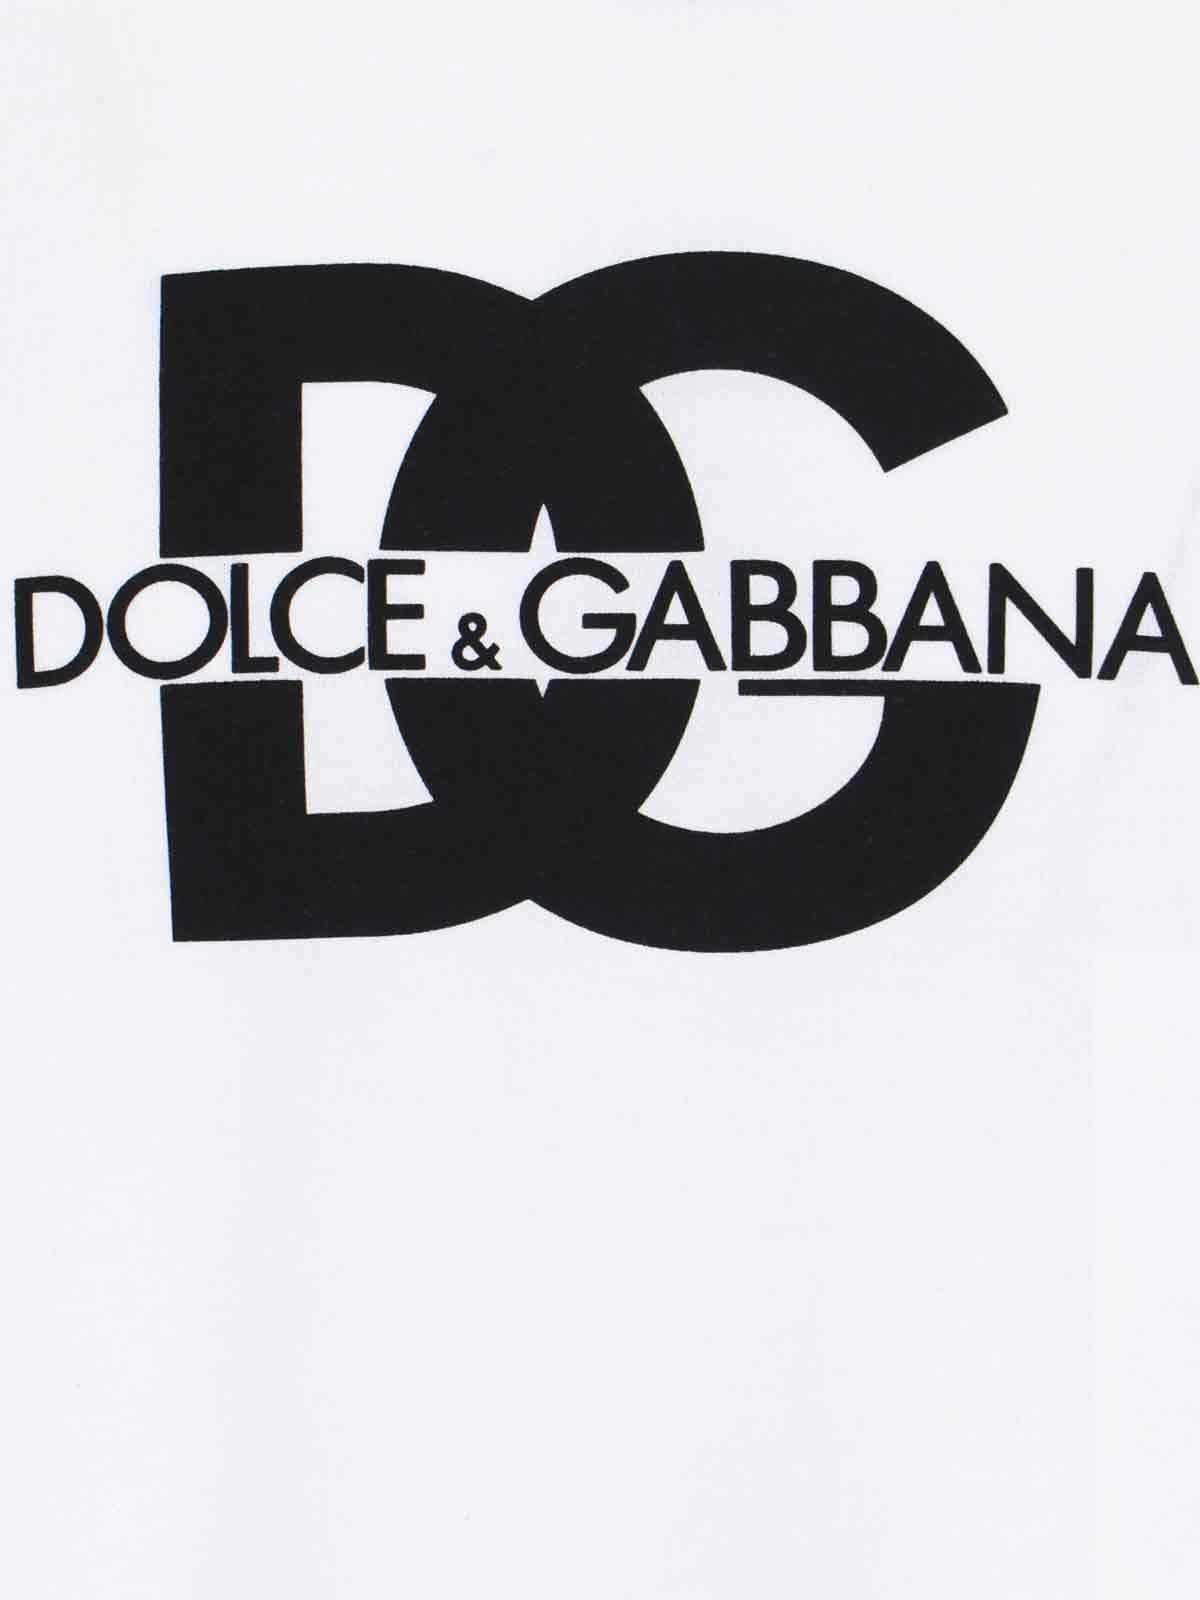 Dolce & Gabbana T-Shirt logo-t-shirt-Dolce & Gabbana-Pantaloni sportivi logo Dolce & Gabbana, in cotone nero, vita elastica, coulisse, due tasche zip laterali, una tasca zip retro, placca logo metallico argentato retro, polsini elastici.-Dresso